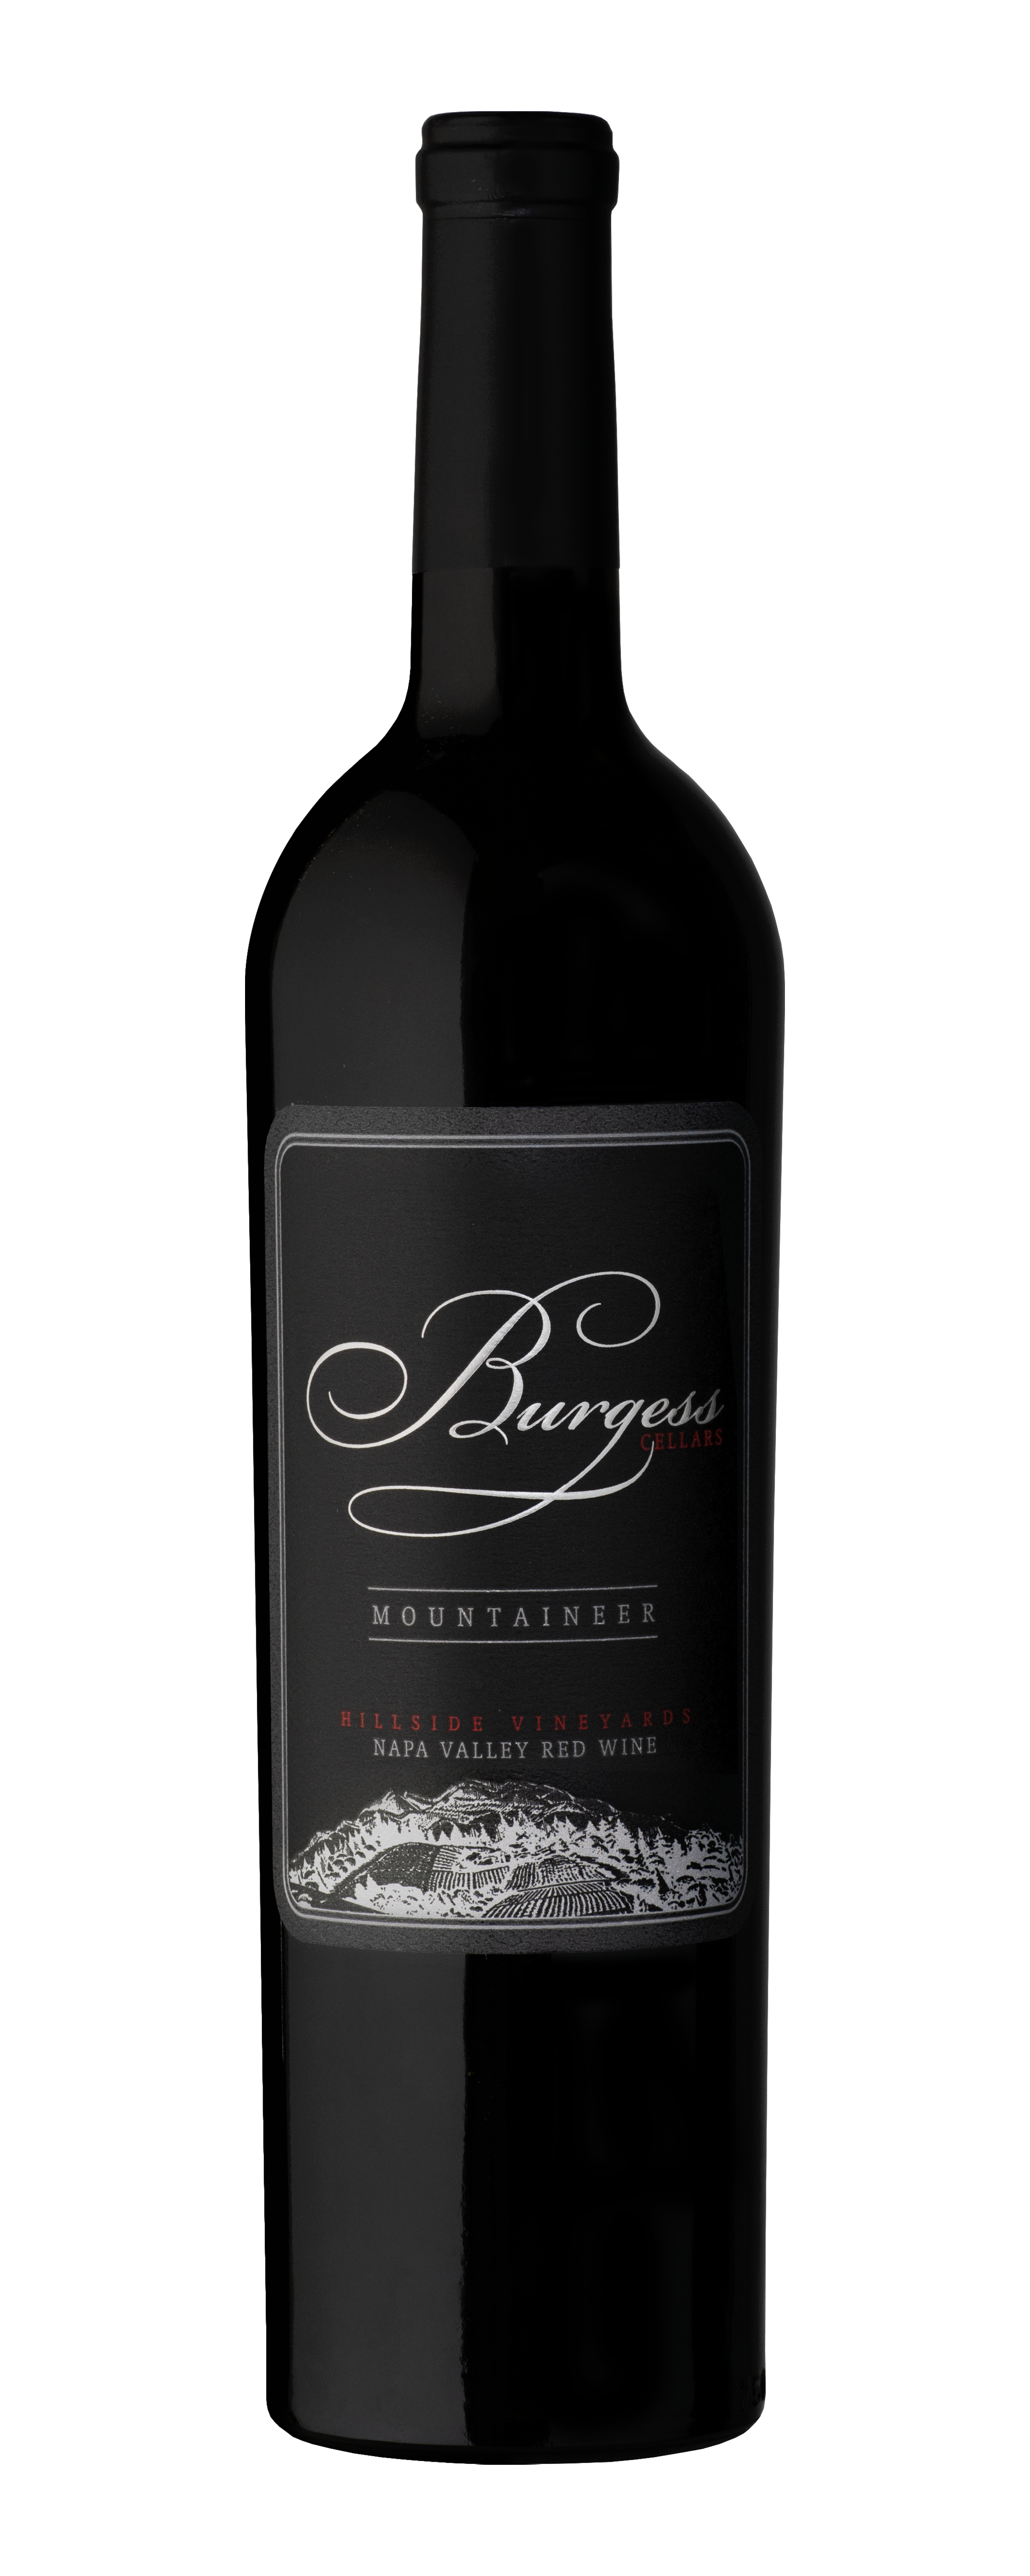 Burgess Mountaineer Napa Valley Red Wine bottle shot, transparent background